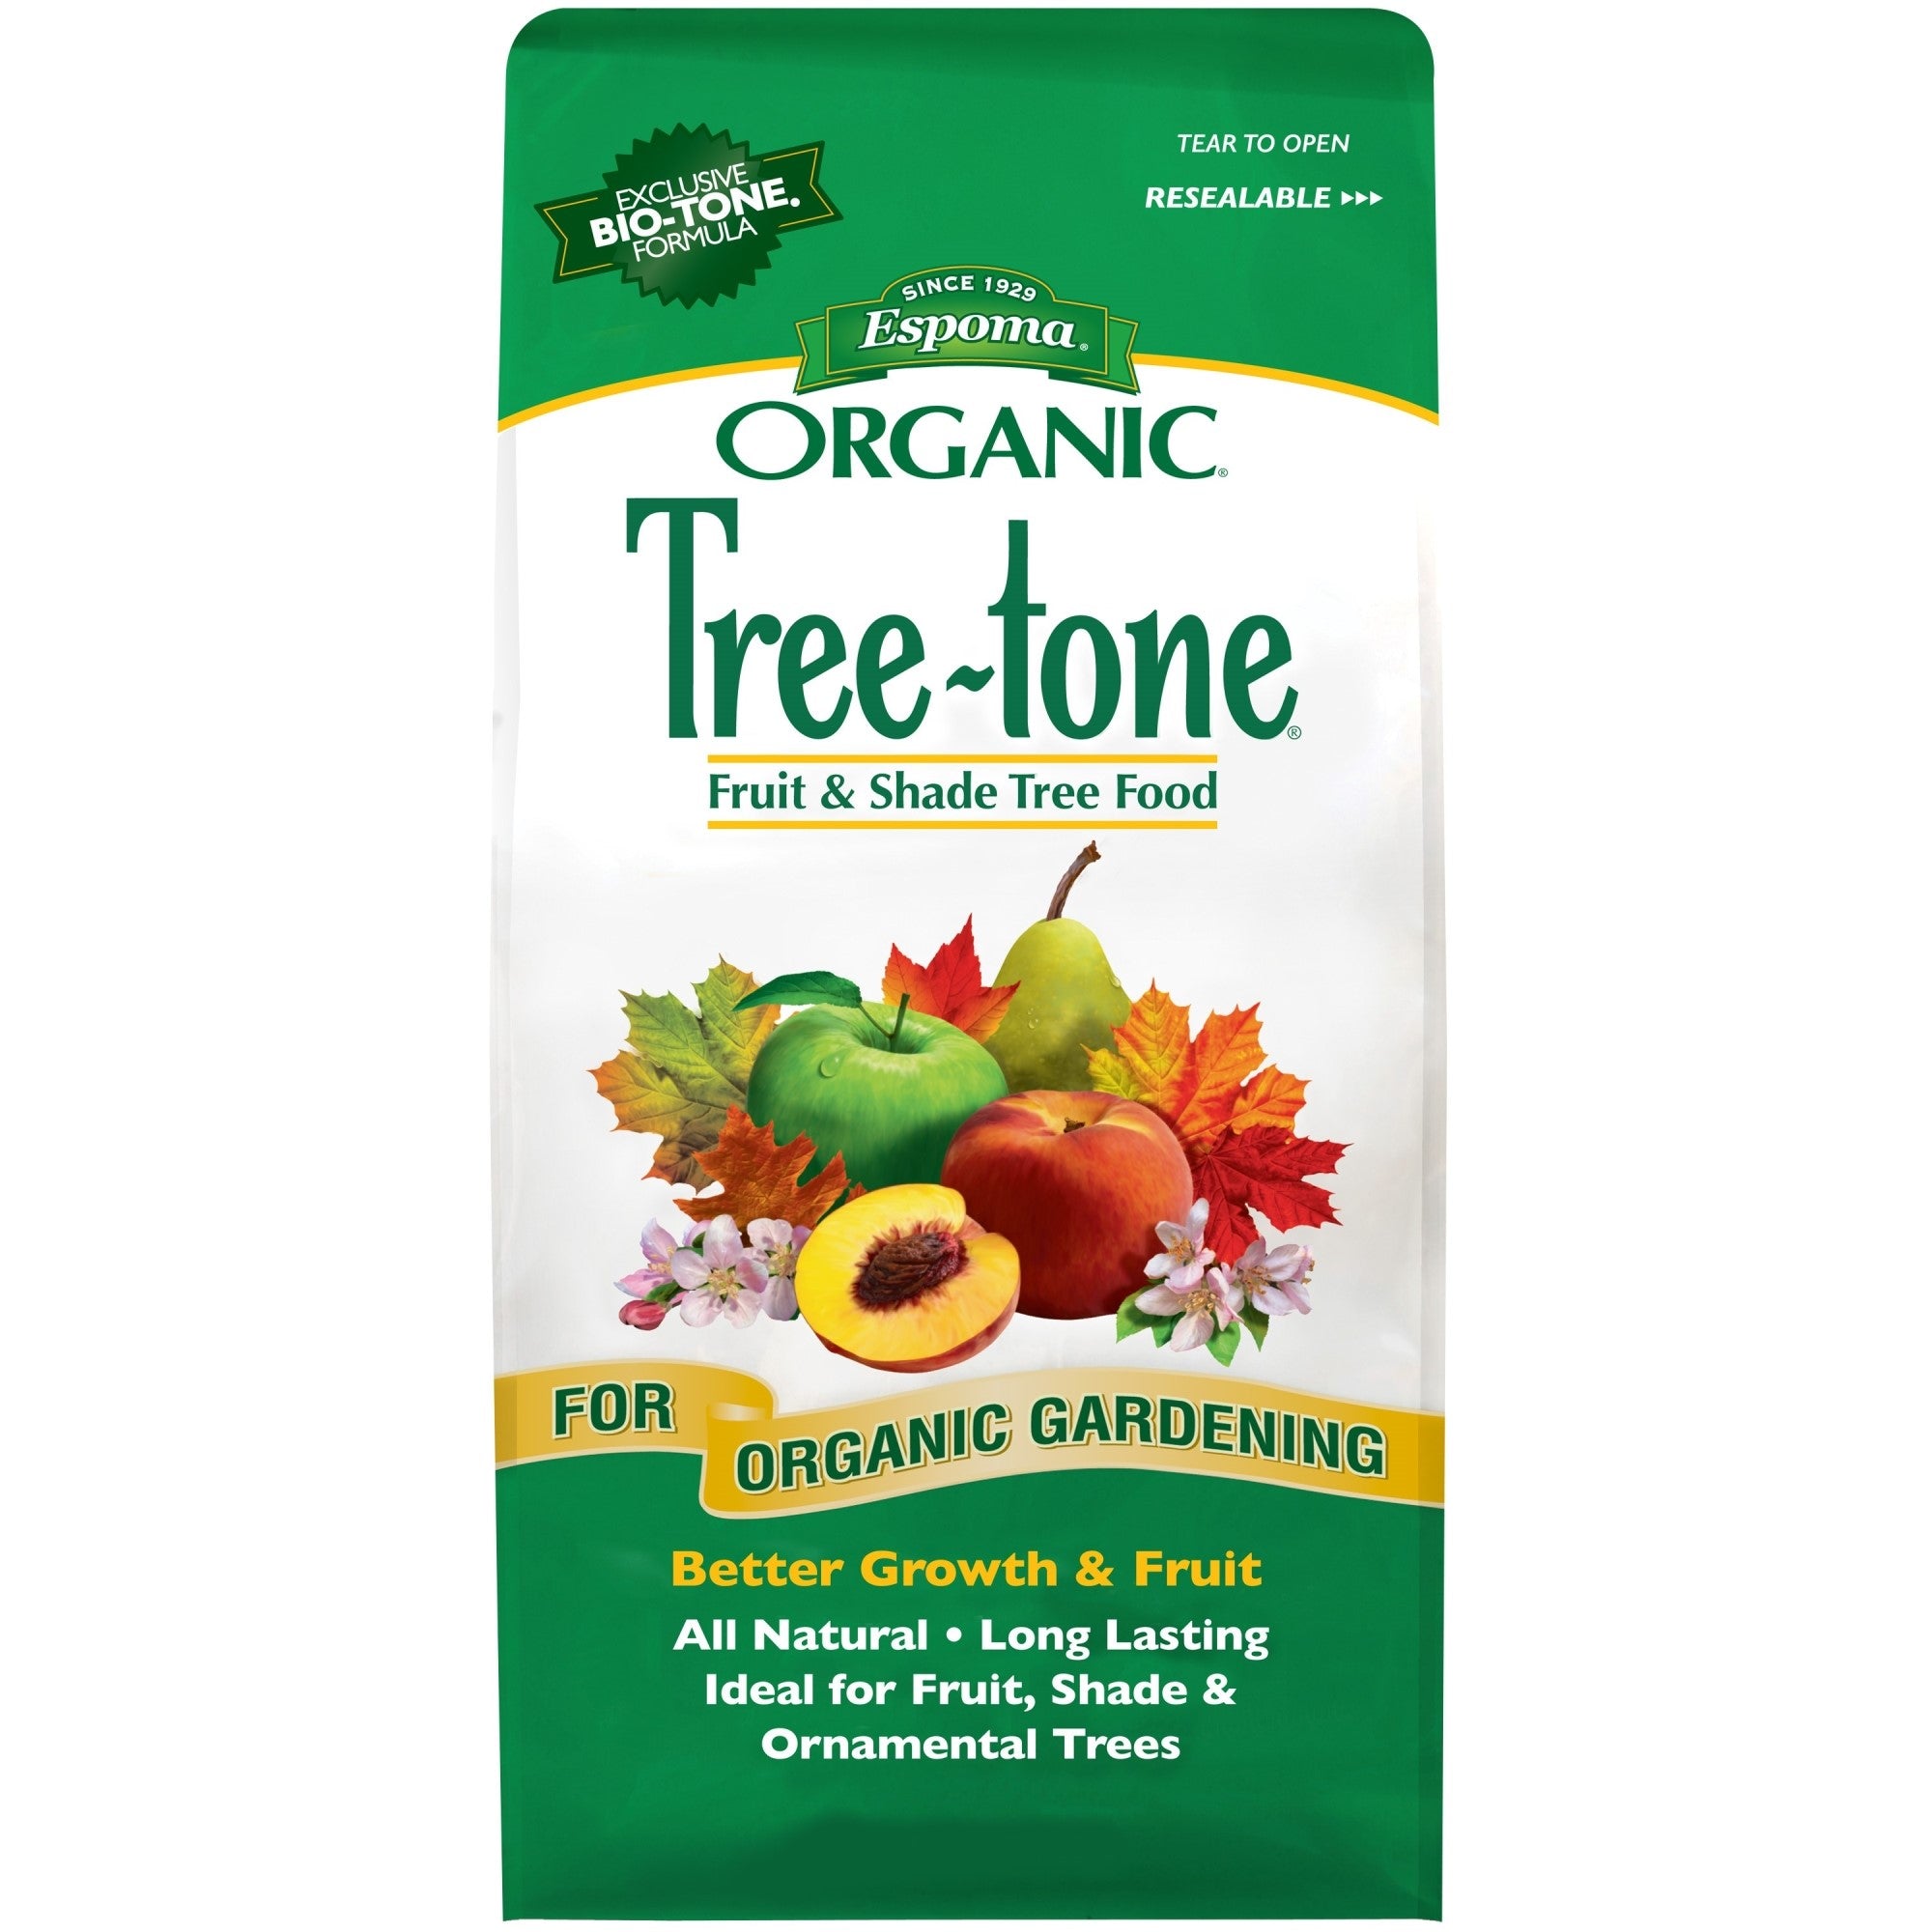 Espoma Organic Tree-tone 6-3-2 Fruit & Shade Tree Food for Organic Gardening, All Natural, Ideal for Fruit, Shade & Ornamental Trees